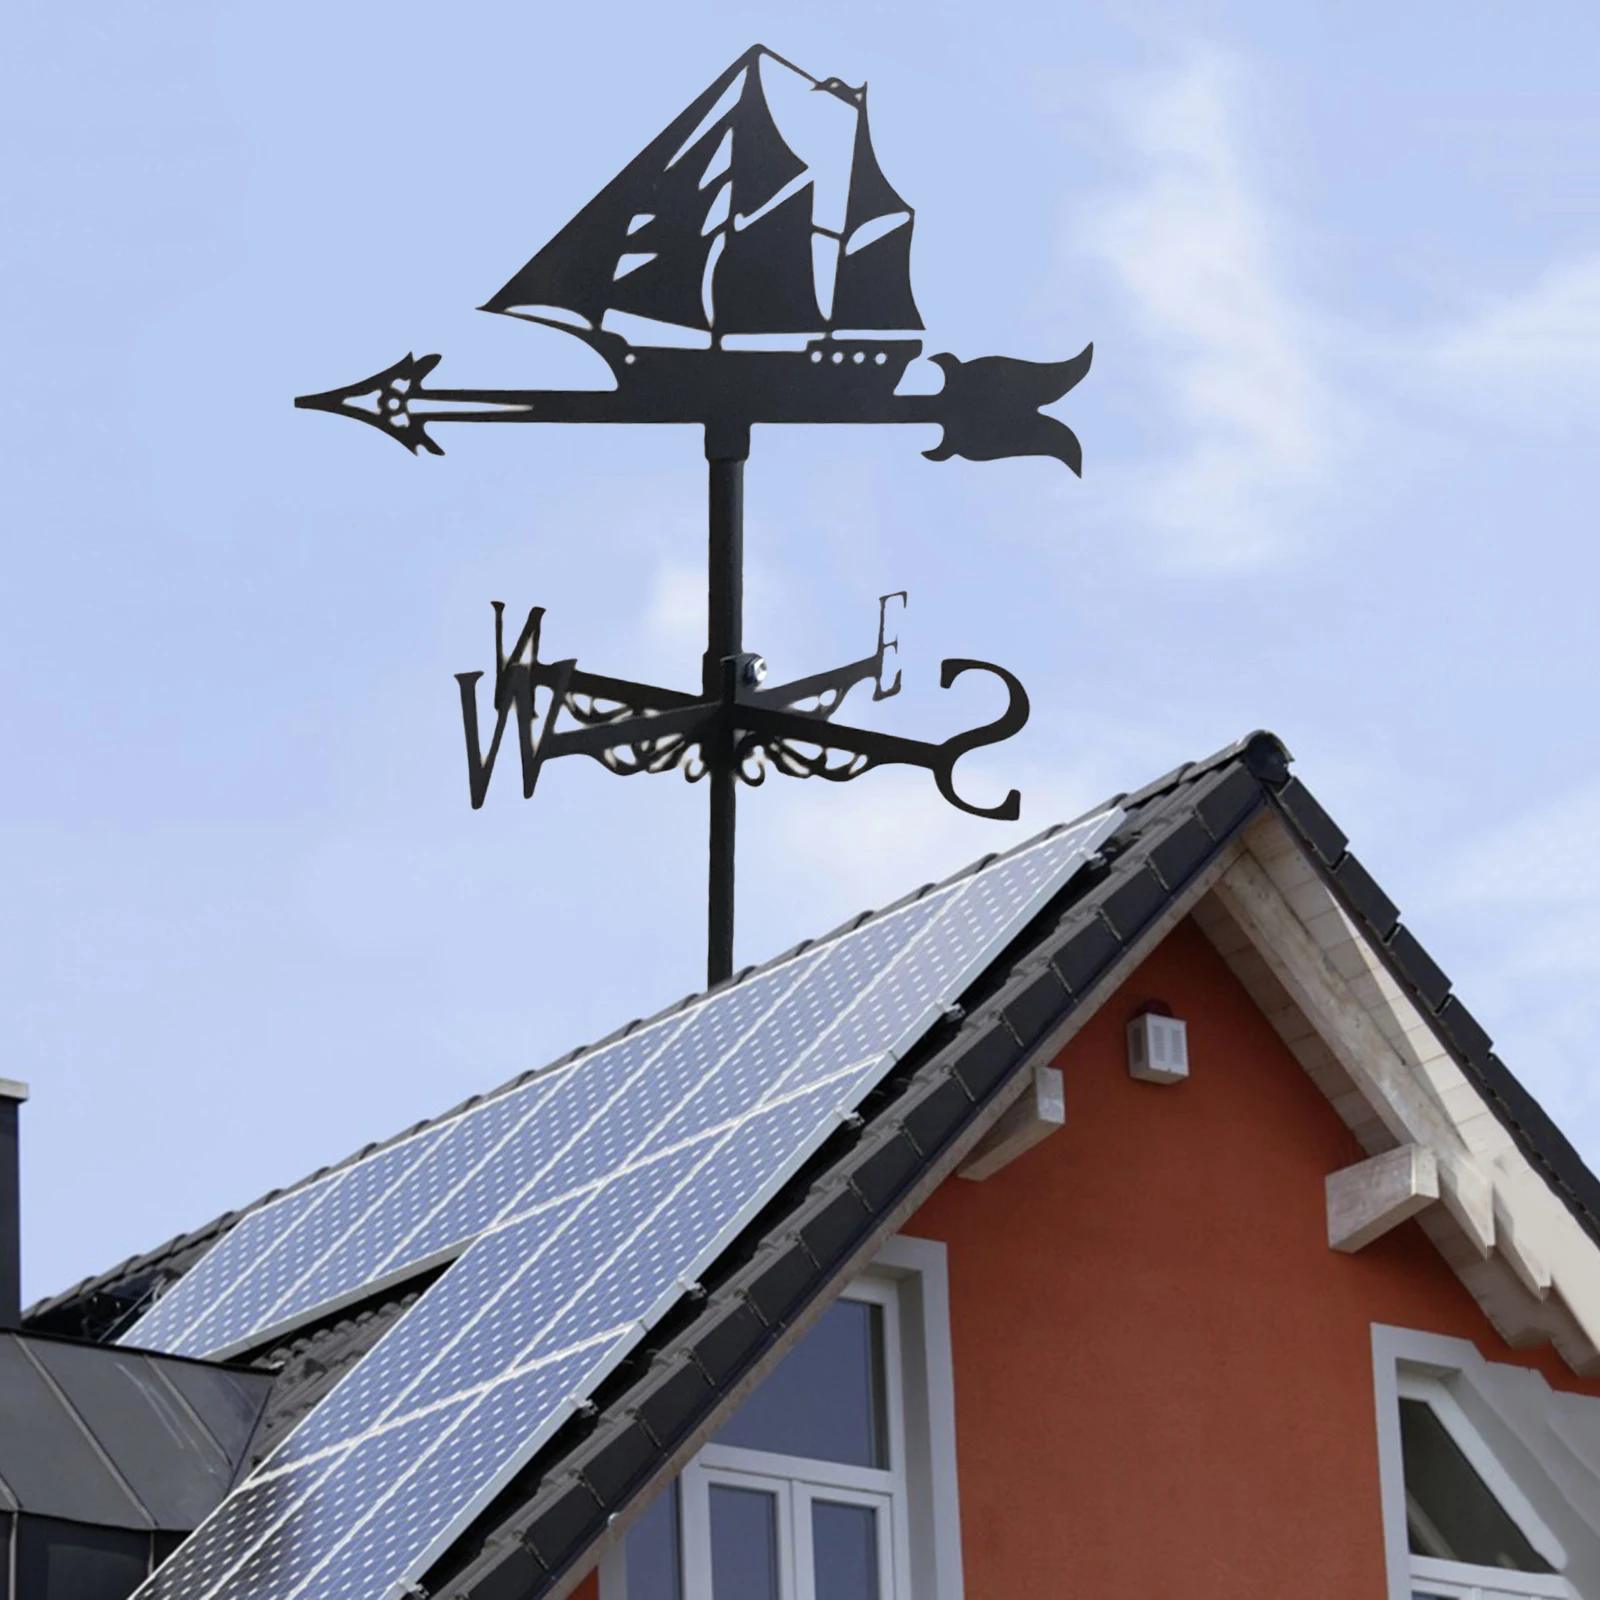 European Style Angler Wind Vane Wind Direction Indicator Yard Ornament Wind Speed Vane Garden Decorations Household